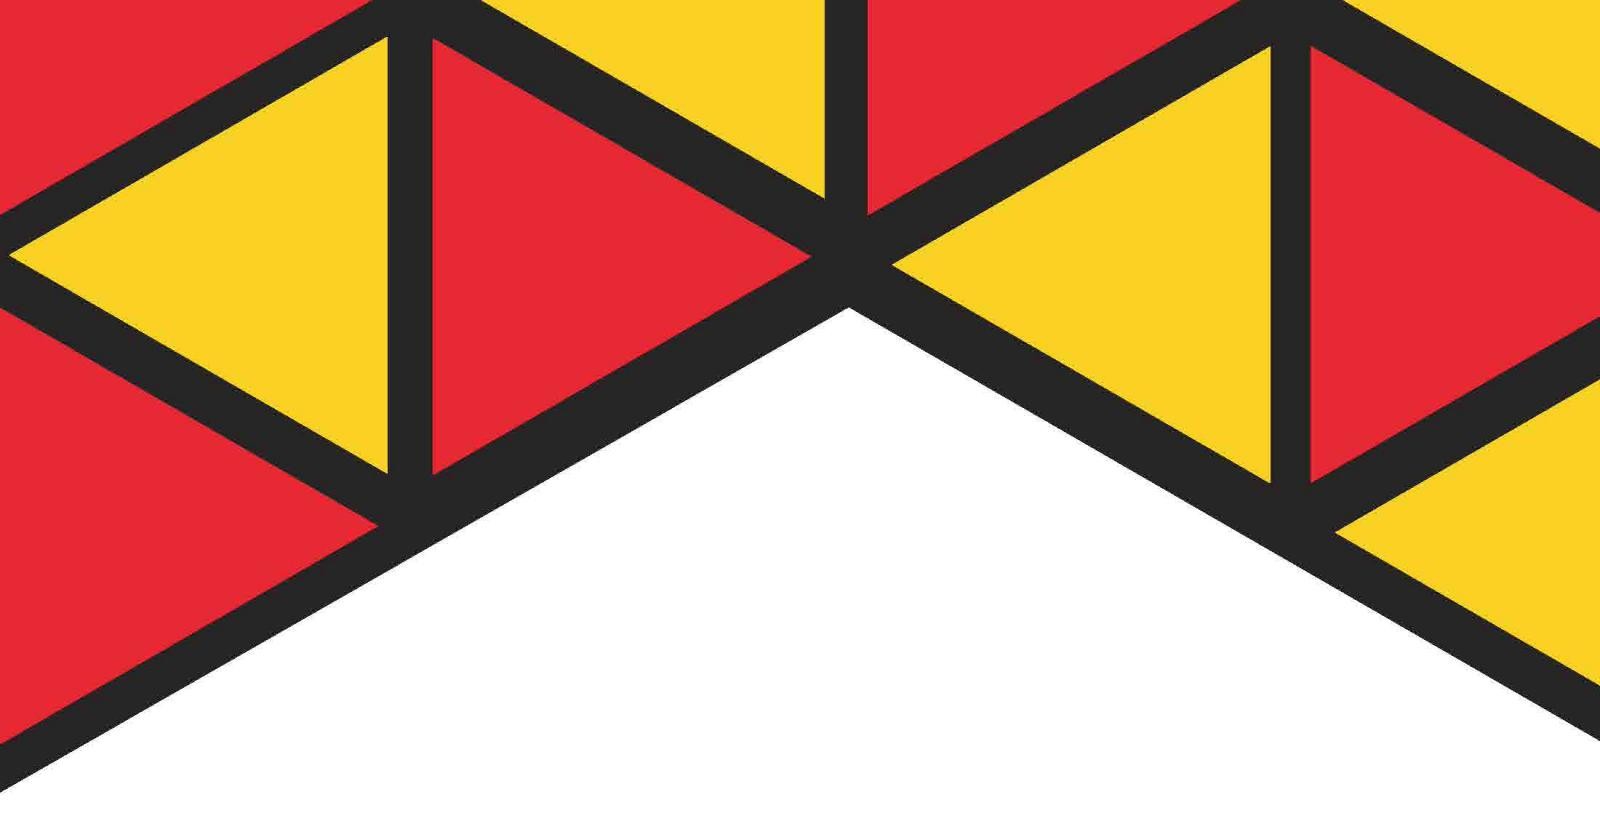 Red and yellow triangular pattern